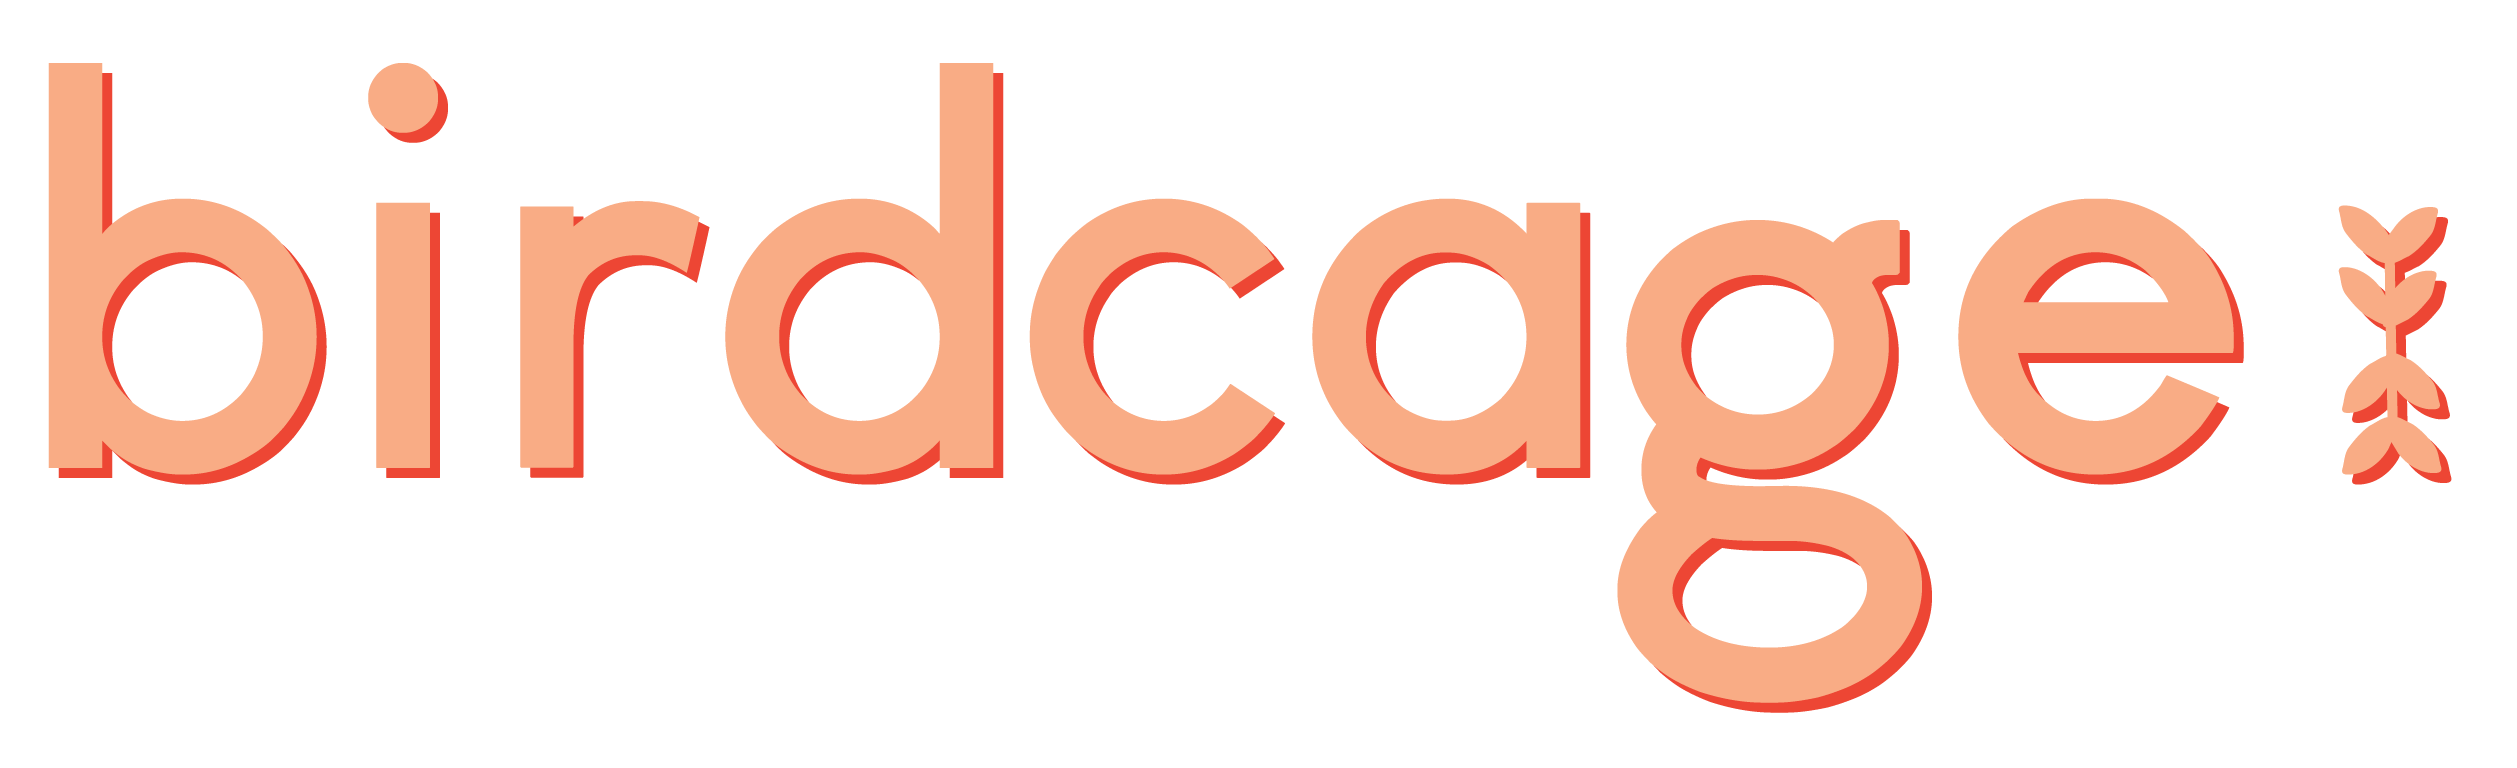 Birdcage_logo